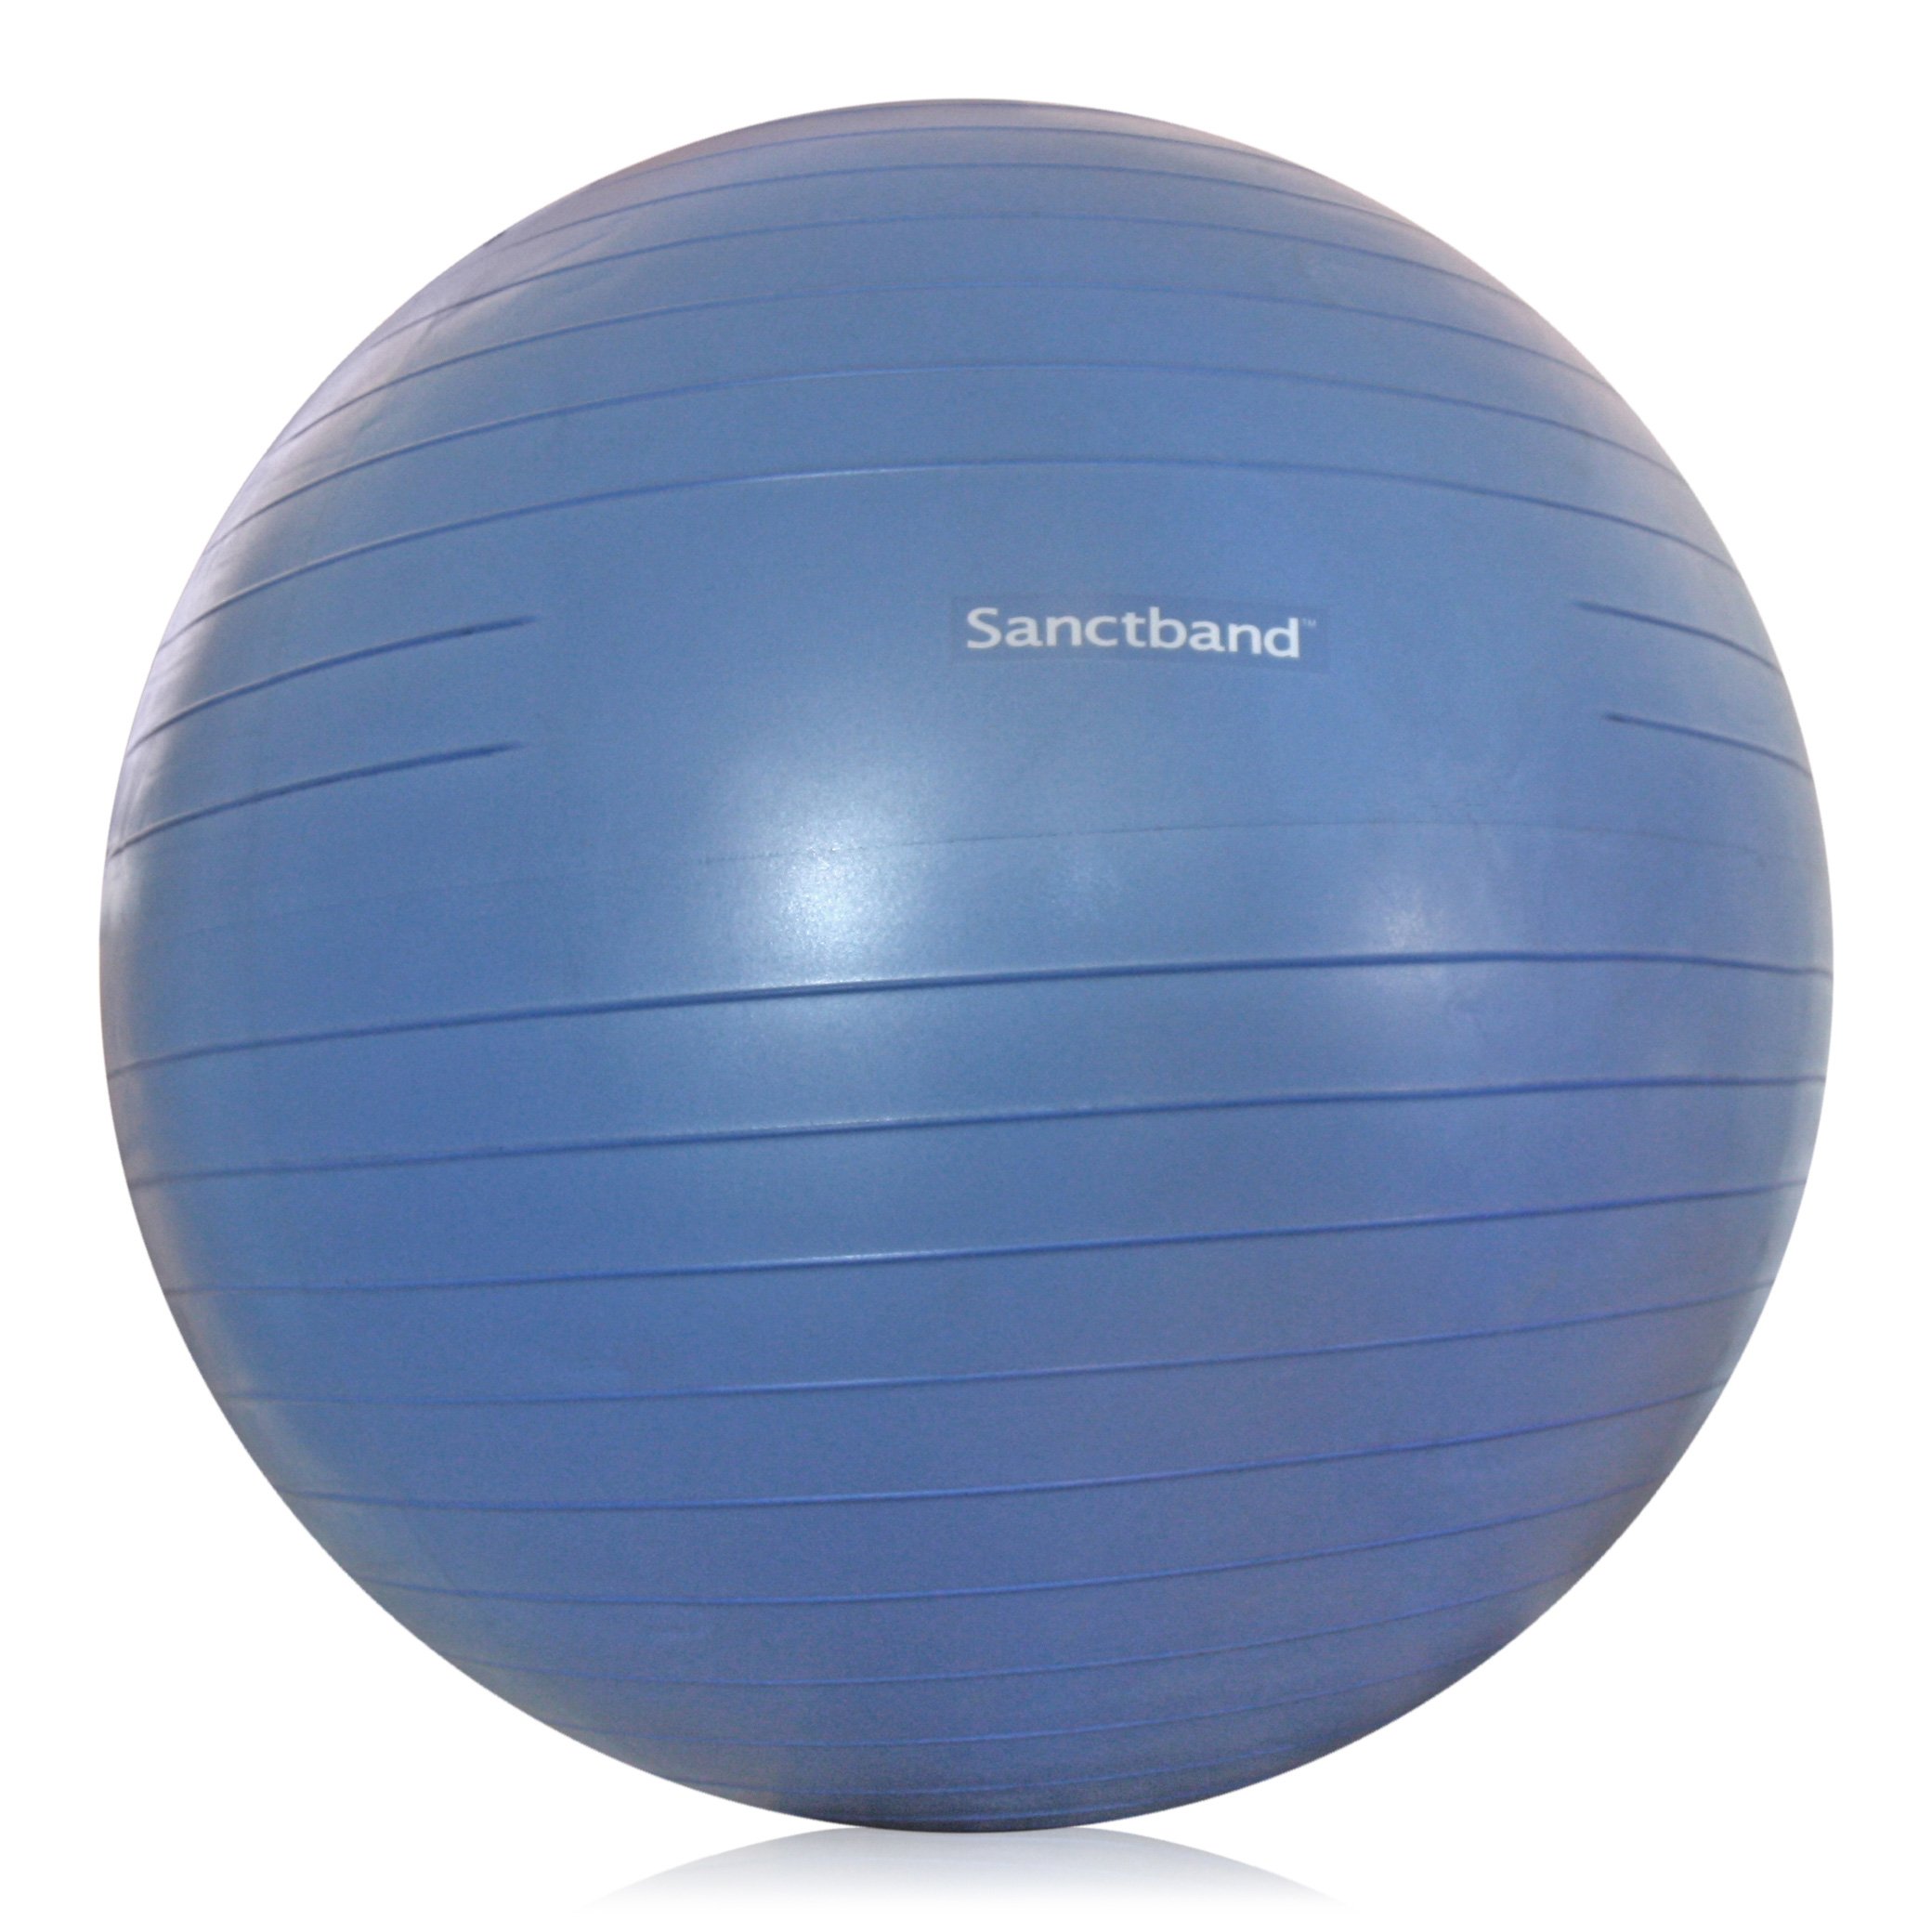 Sanctband Anti Burst Gymnastikball Blau 75cm Durchmesser